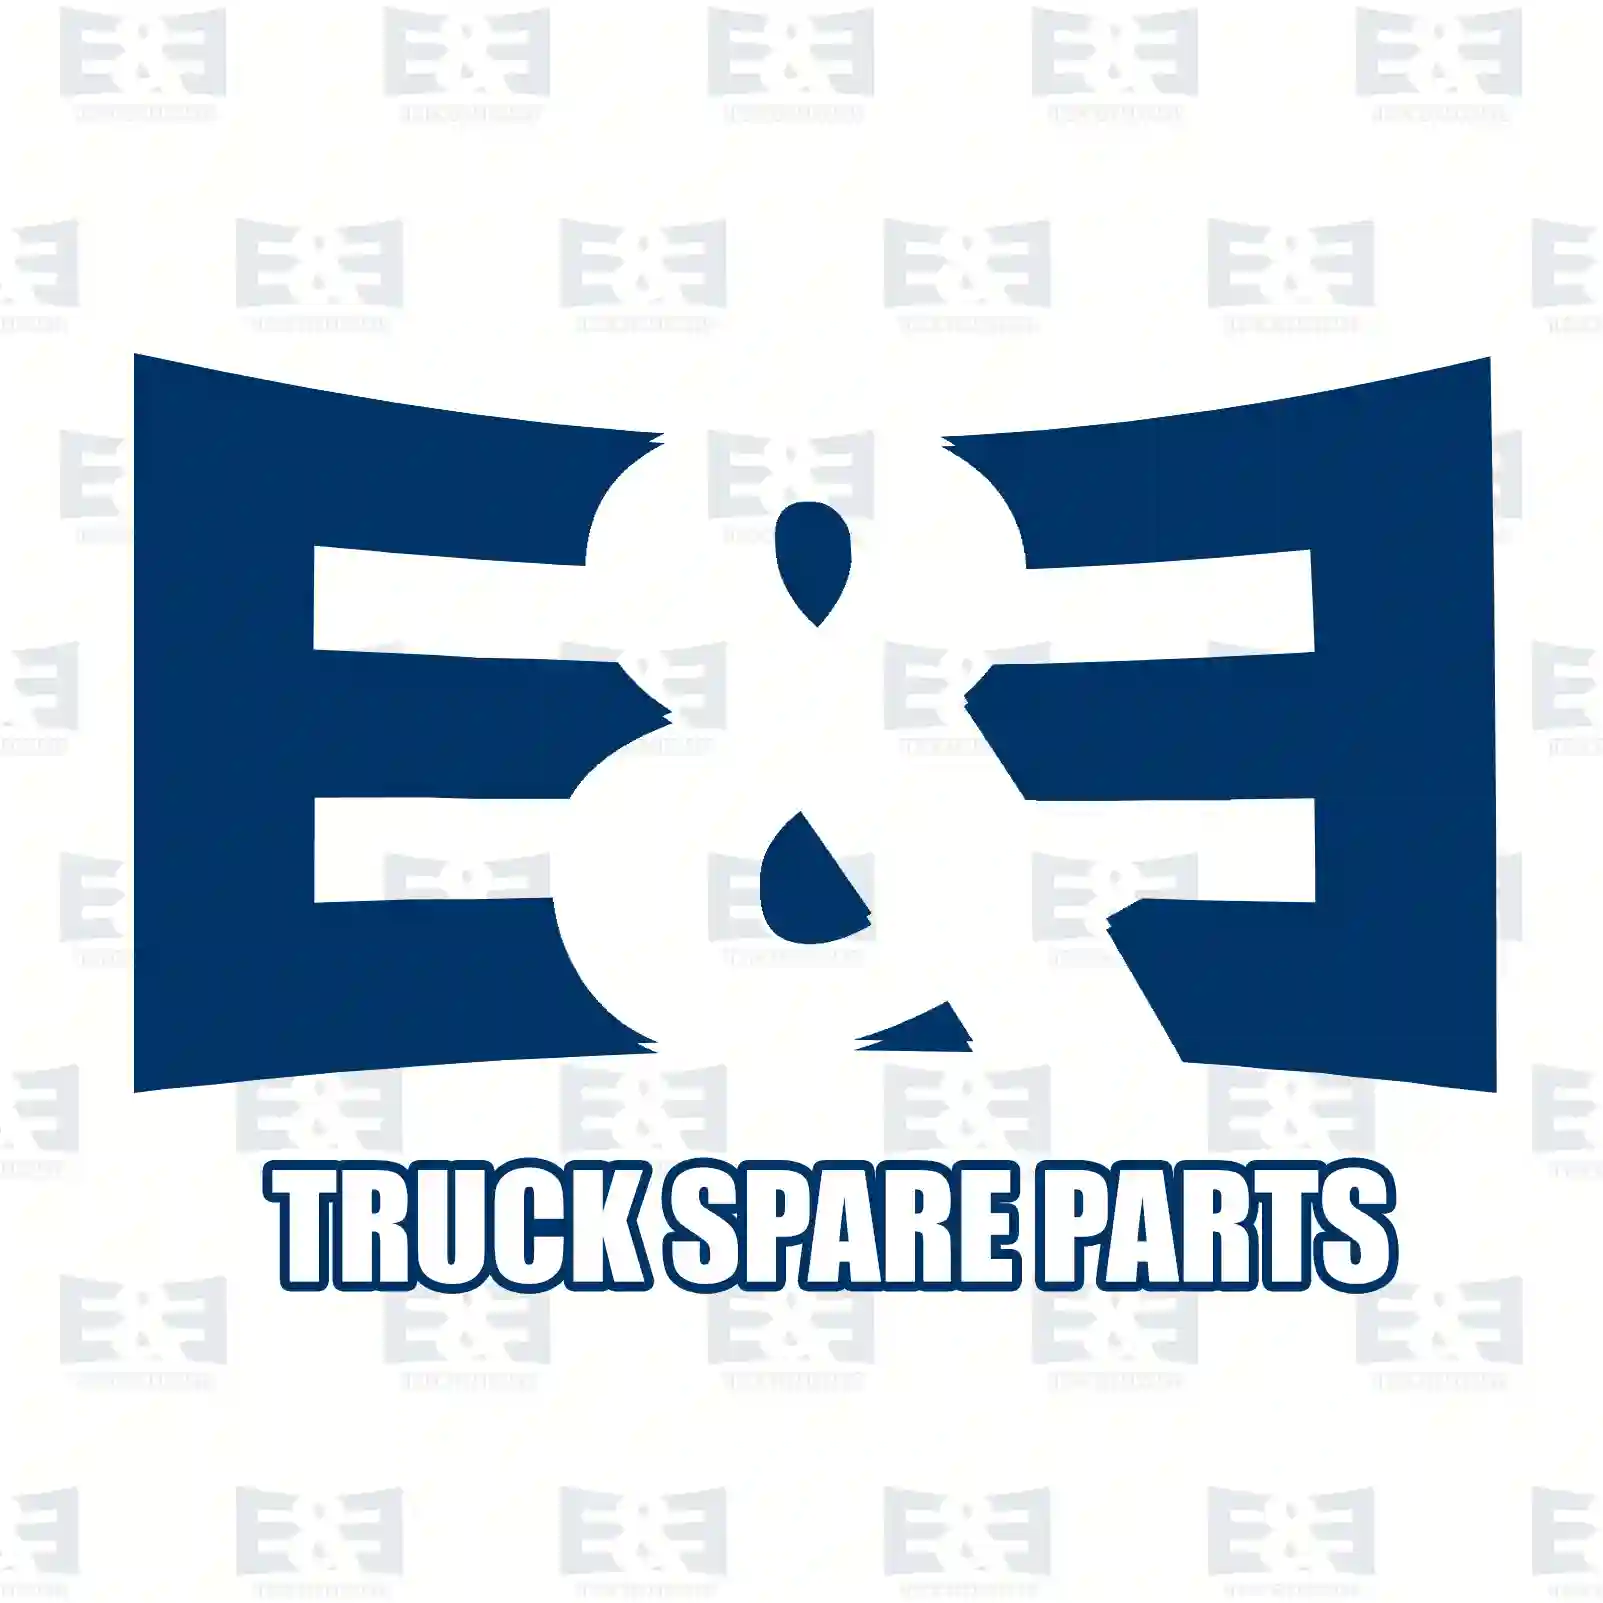  Repair kit, reaction rod || E&E Truck Spare Parts | Truck Spare Parts, Auotomotive Spare Parts